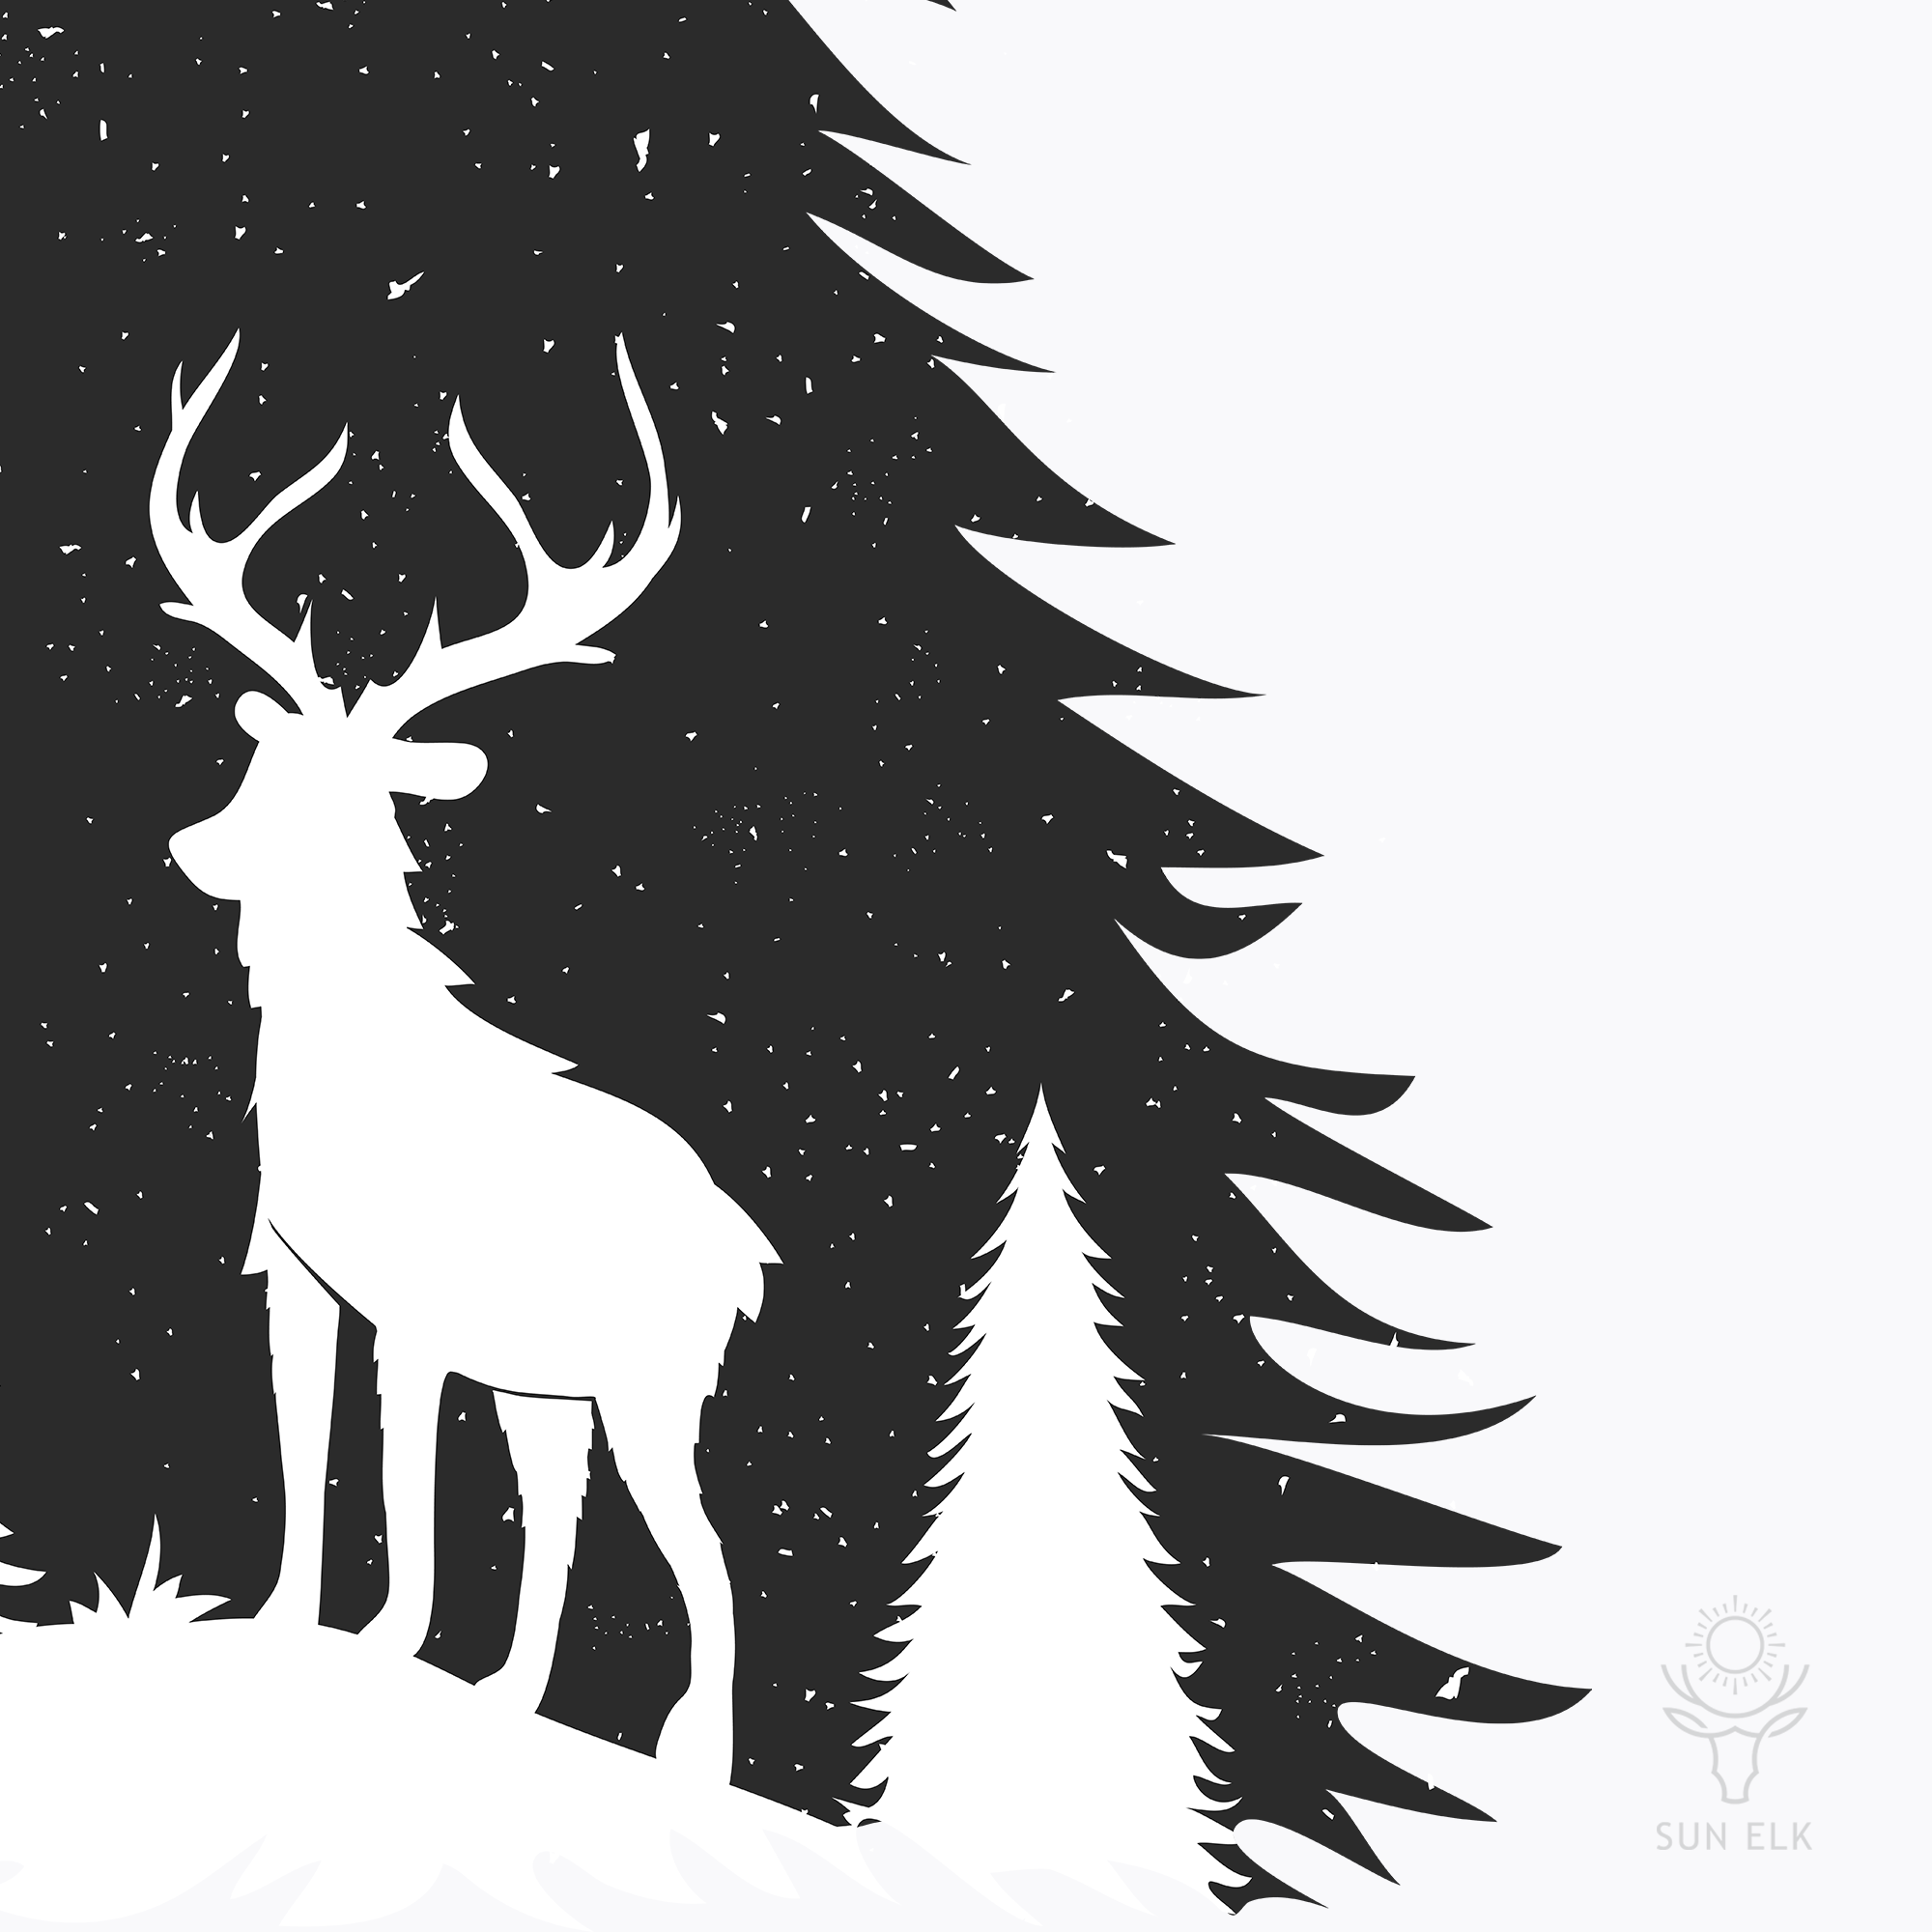 Deer Elk & Pine Trees Softstyle T-Shirt